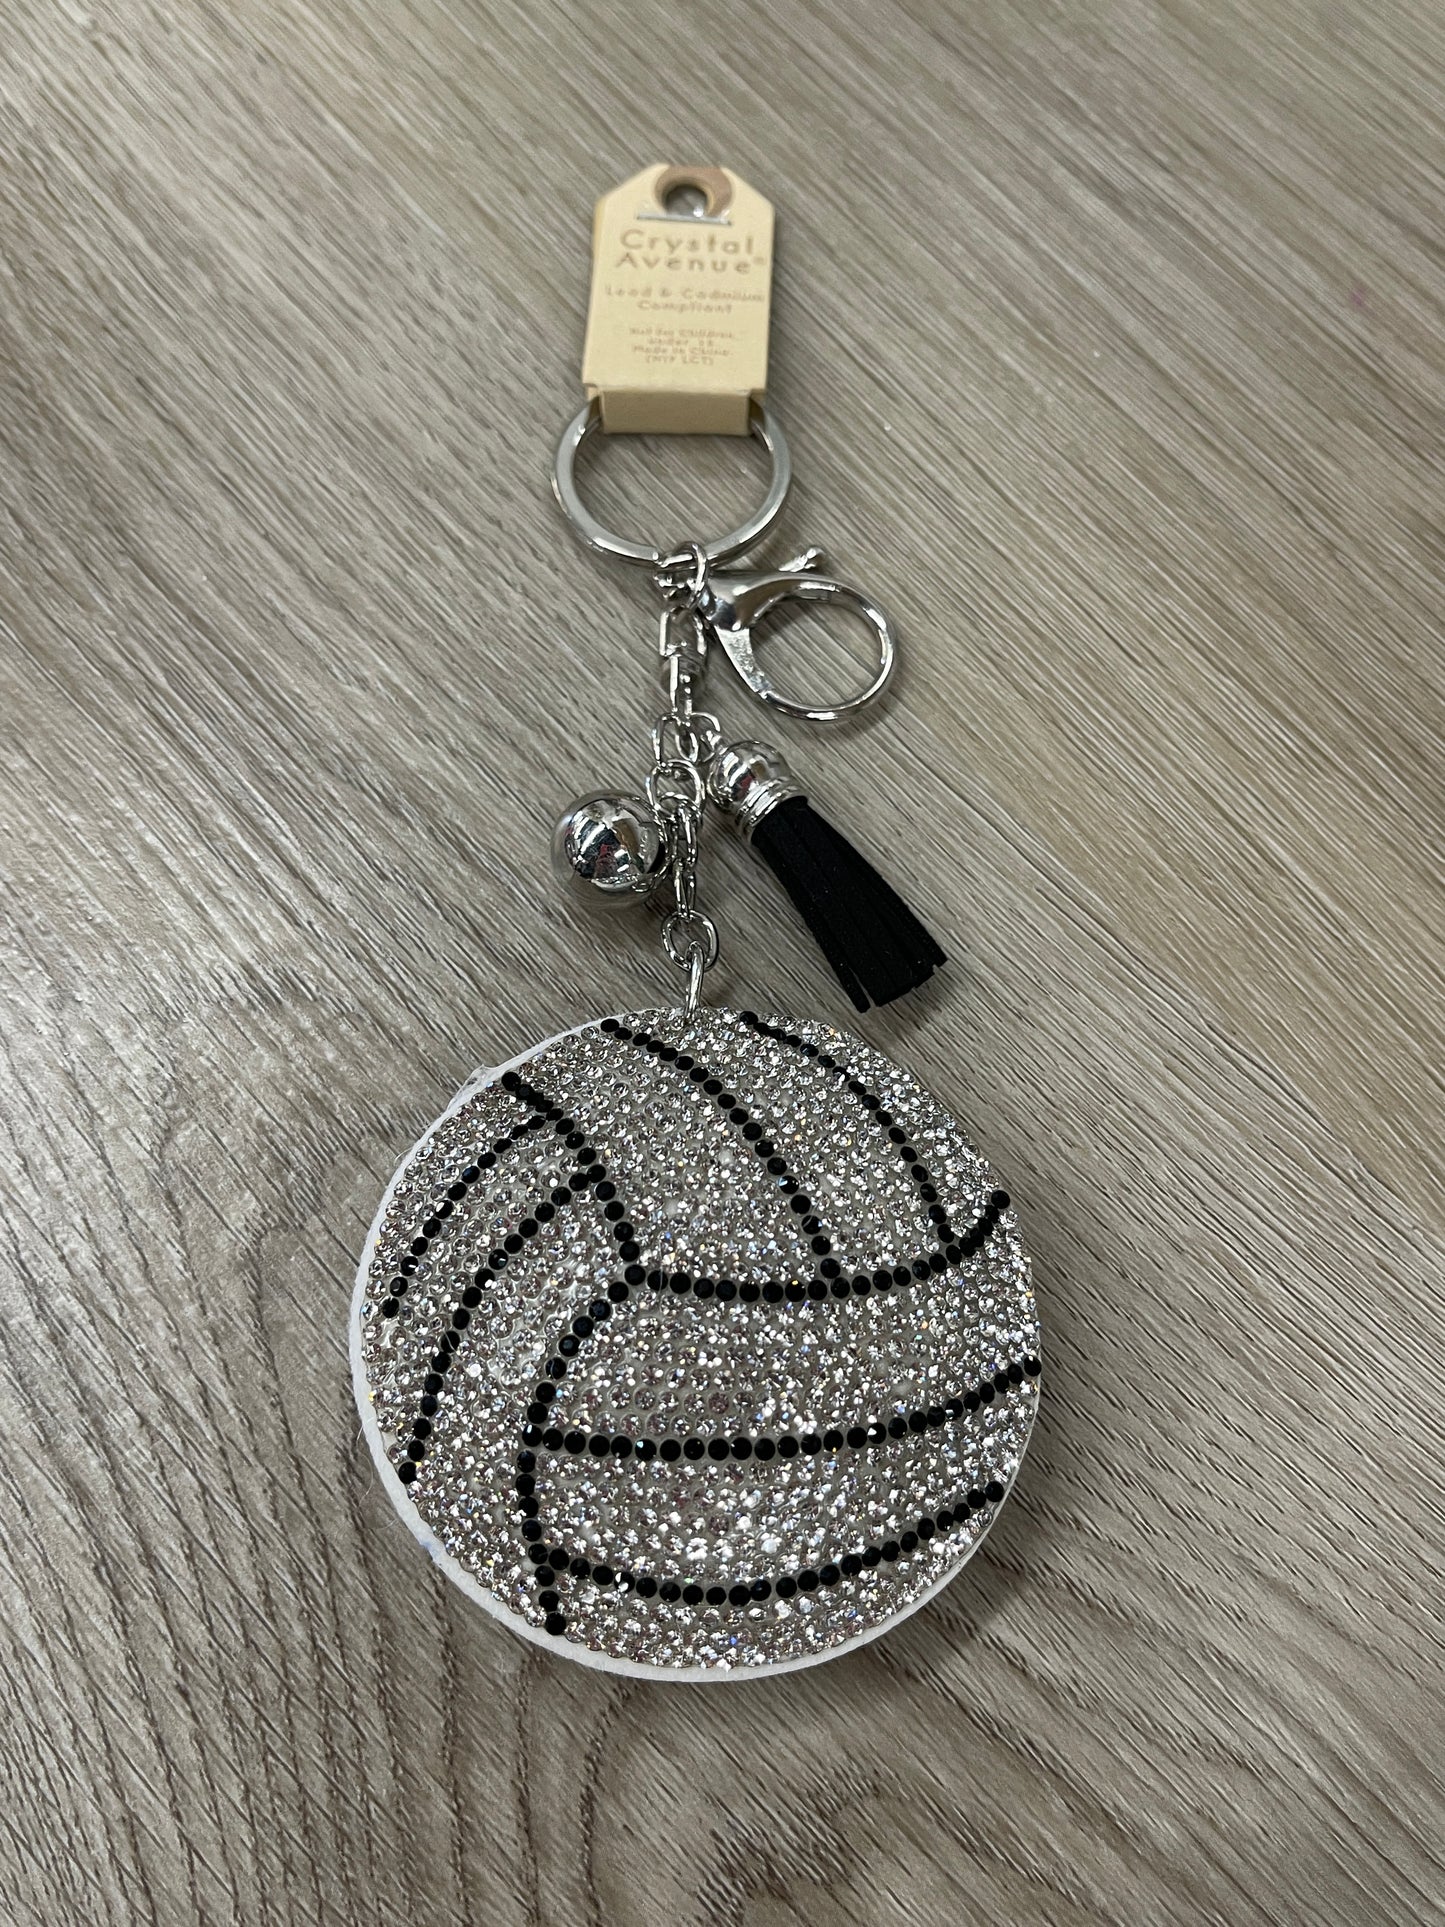 Crystal Volleyball Puffy Keychain Purse Charm